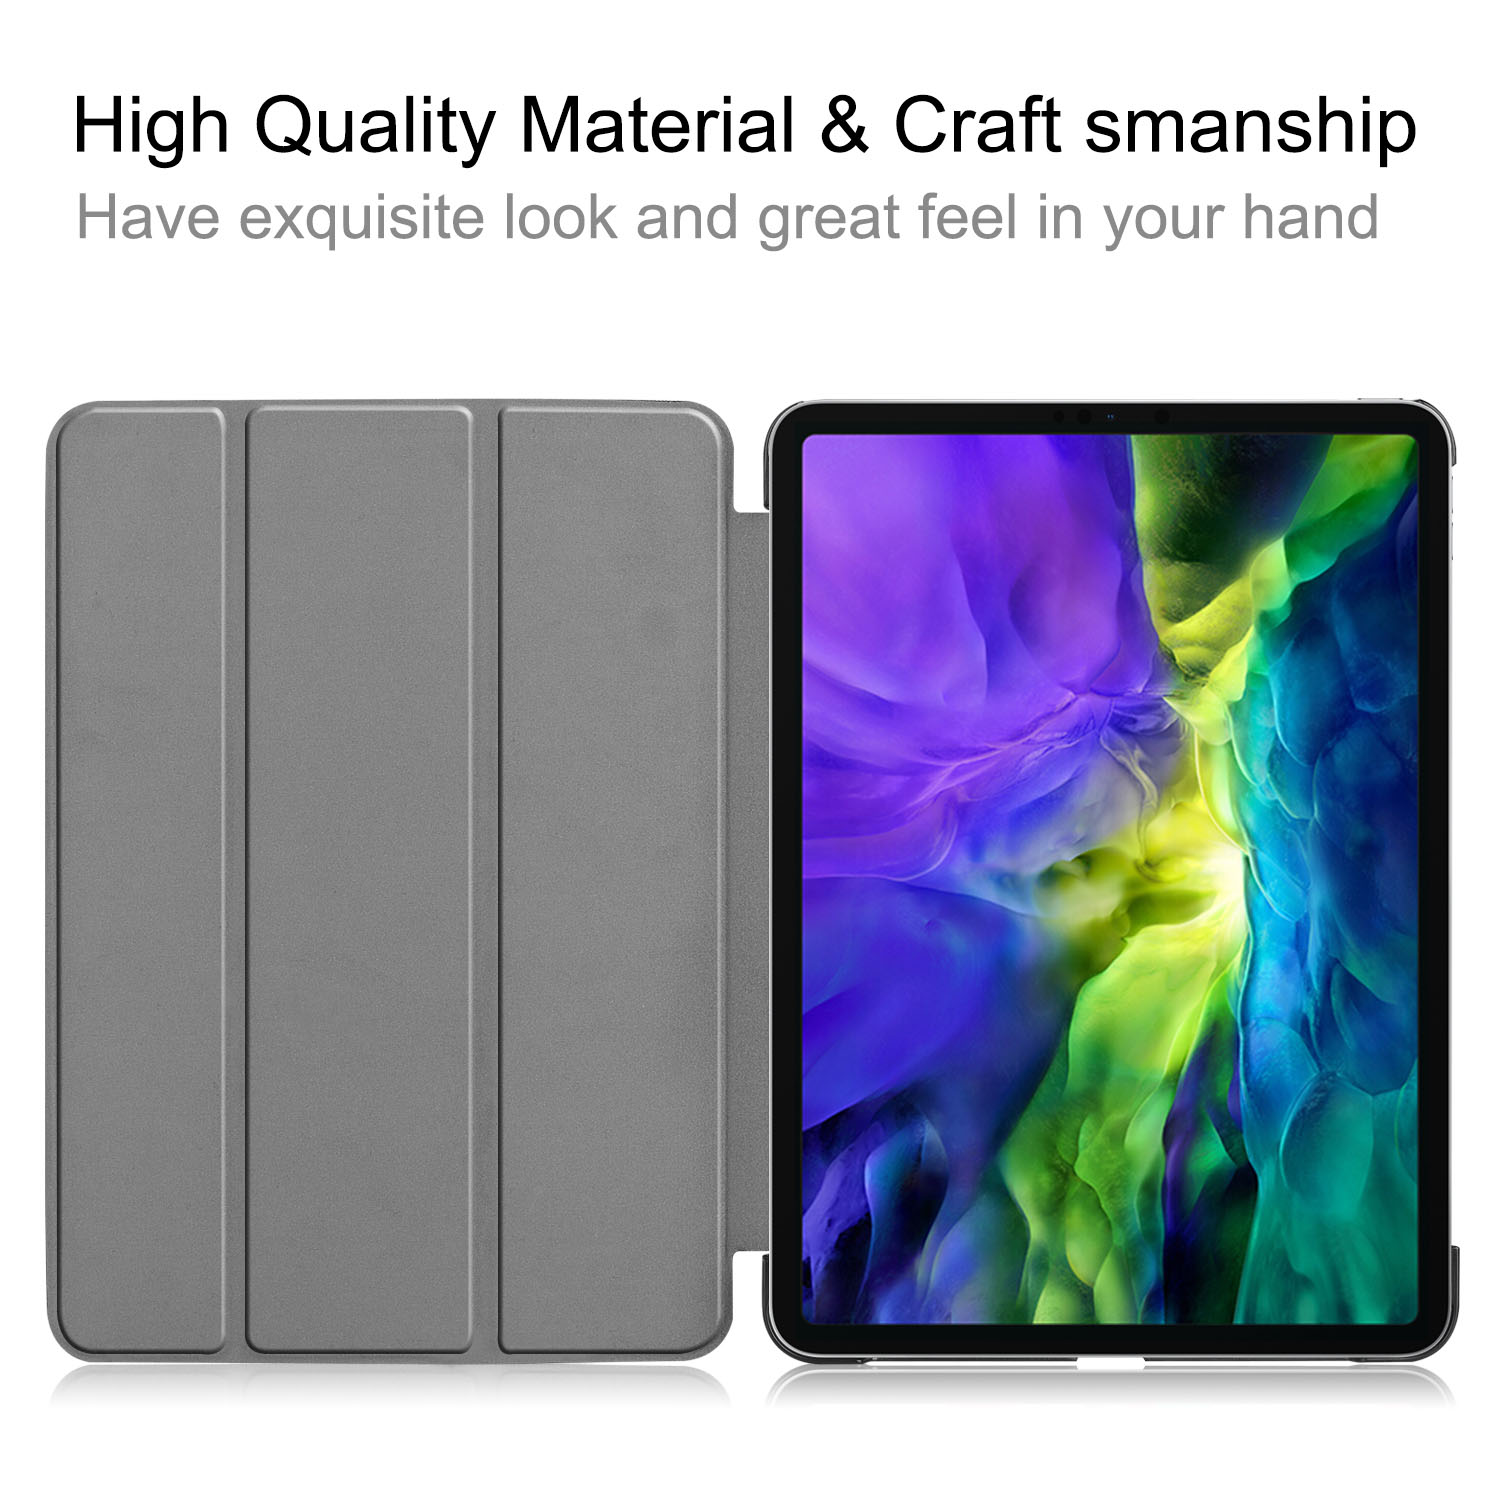 Smart cover/ställ, iPad Pro 11 (2020), blå